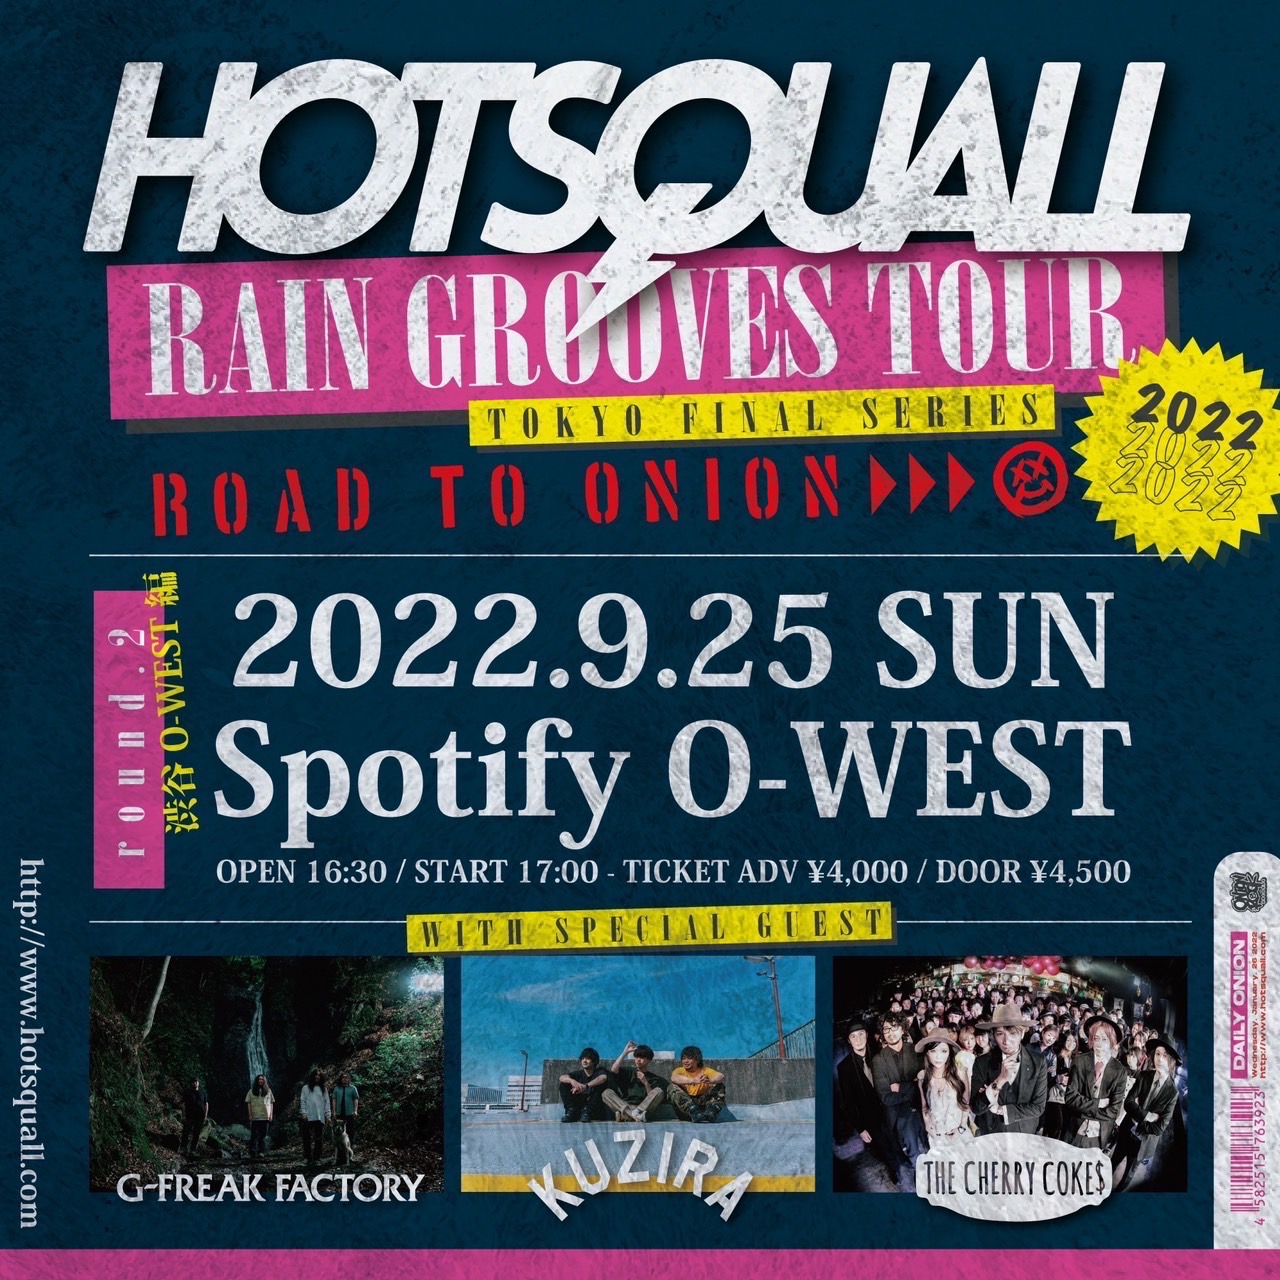 Hotsquall Pre Road To Onion Rain Grooves Tour 22 Tokyo Final Series Round 2 渋 O West編 Spotify O East O West O Crest O Nest